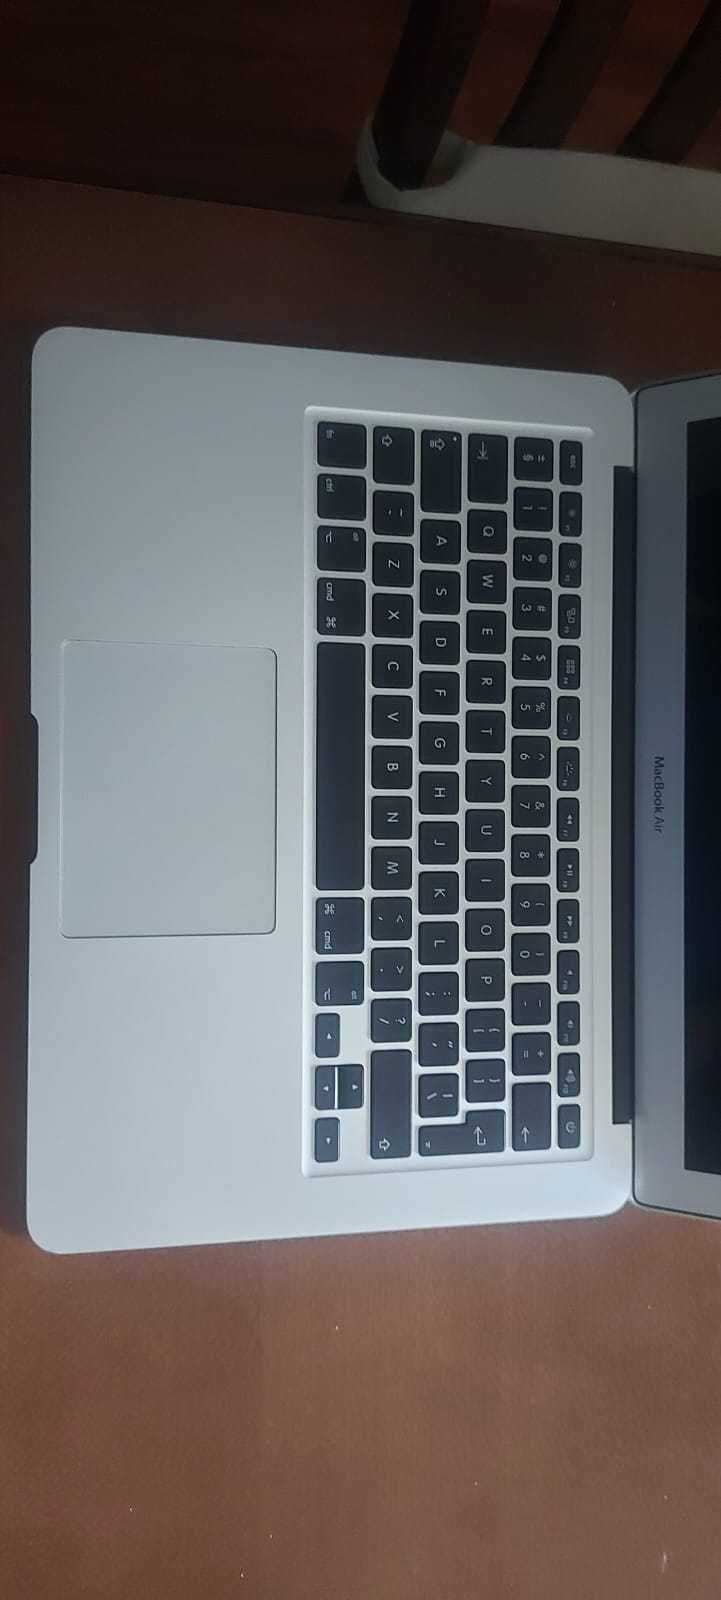 MacBook Air 13, procesor Intel® Dual Core™ i5, baterie noua